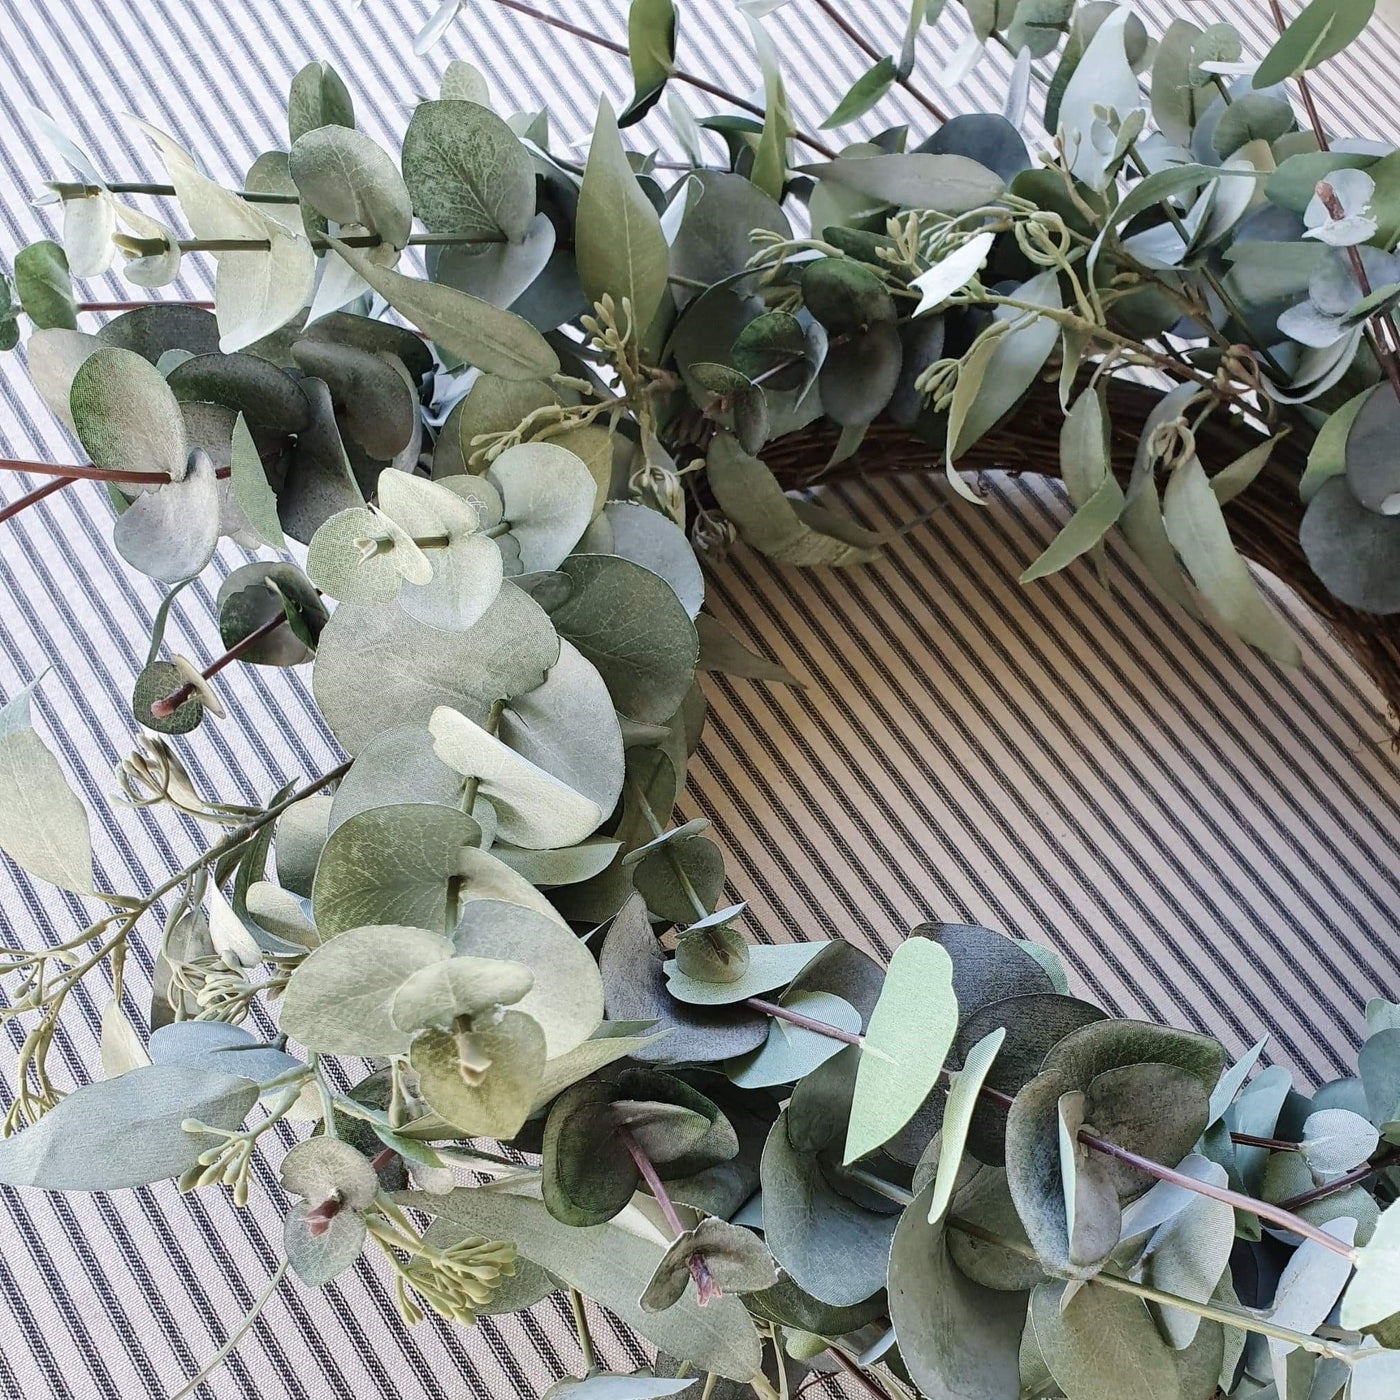 Eucalyptus Wreath